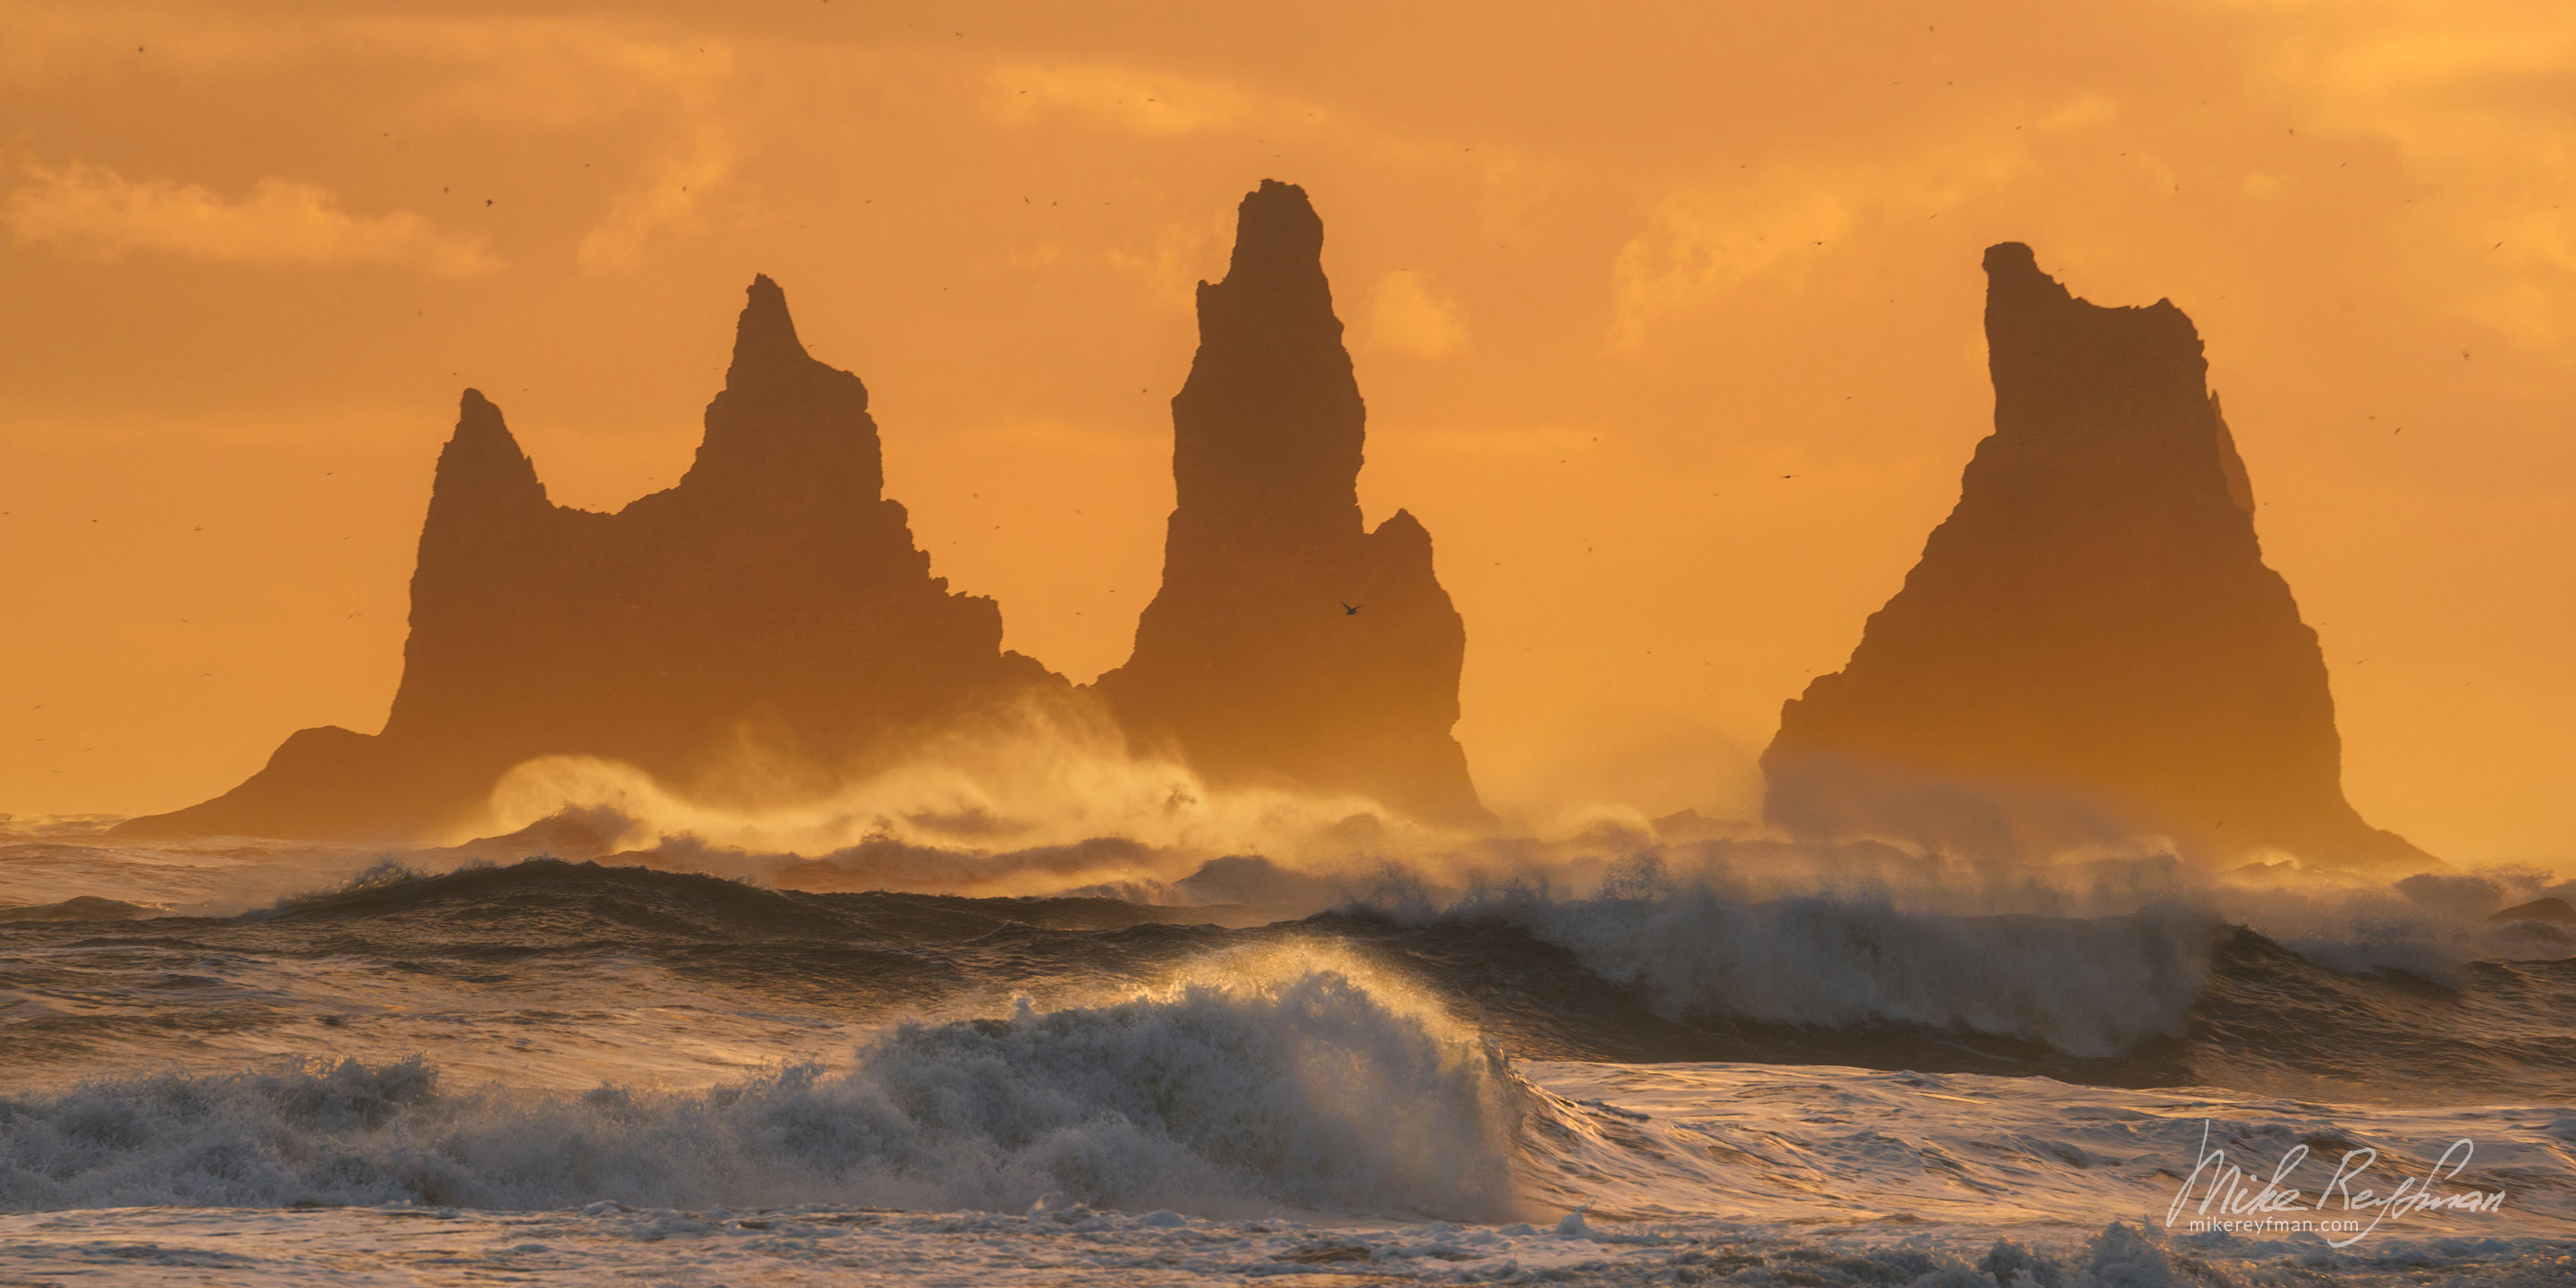 Reynisdrangar basalt sea stacks with breaking waves on the foreground.  Reynisfjara, Vík í Mýrdal, Southern Iceland. 005-IC-CL_D1E3271 - Where Lava Meets the Ocean. Iceland coastline. - Mike Reyfman Photography